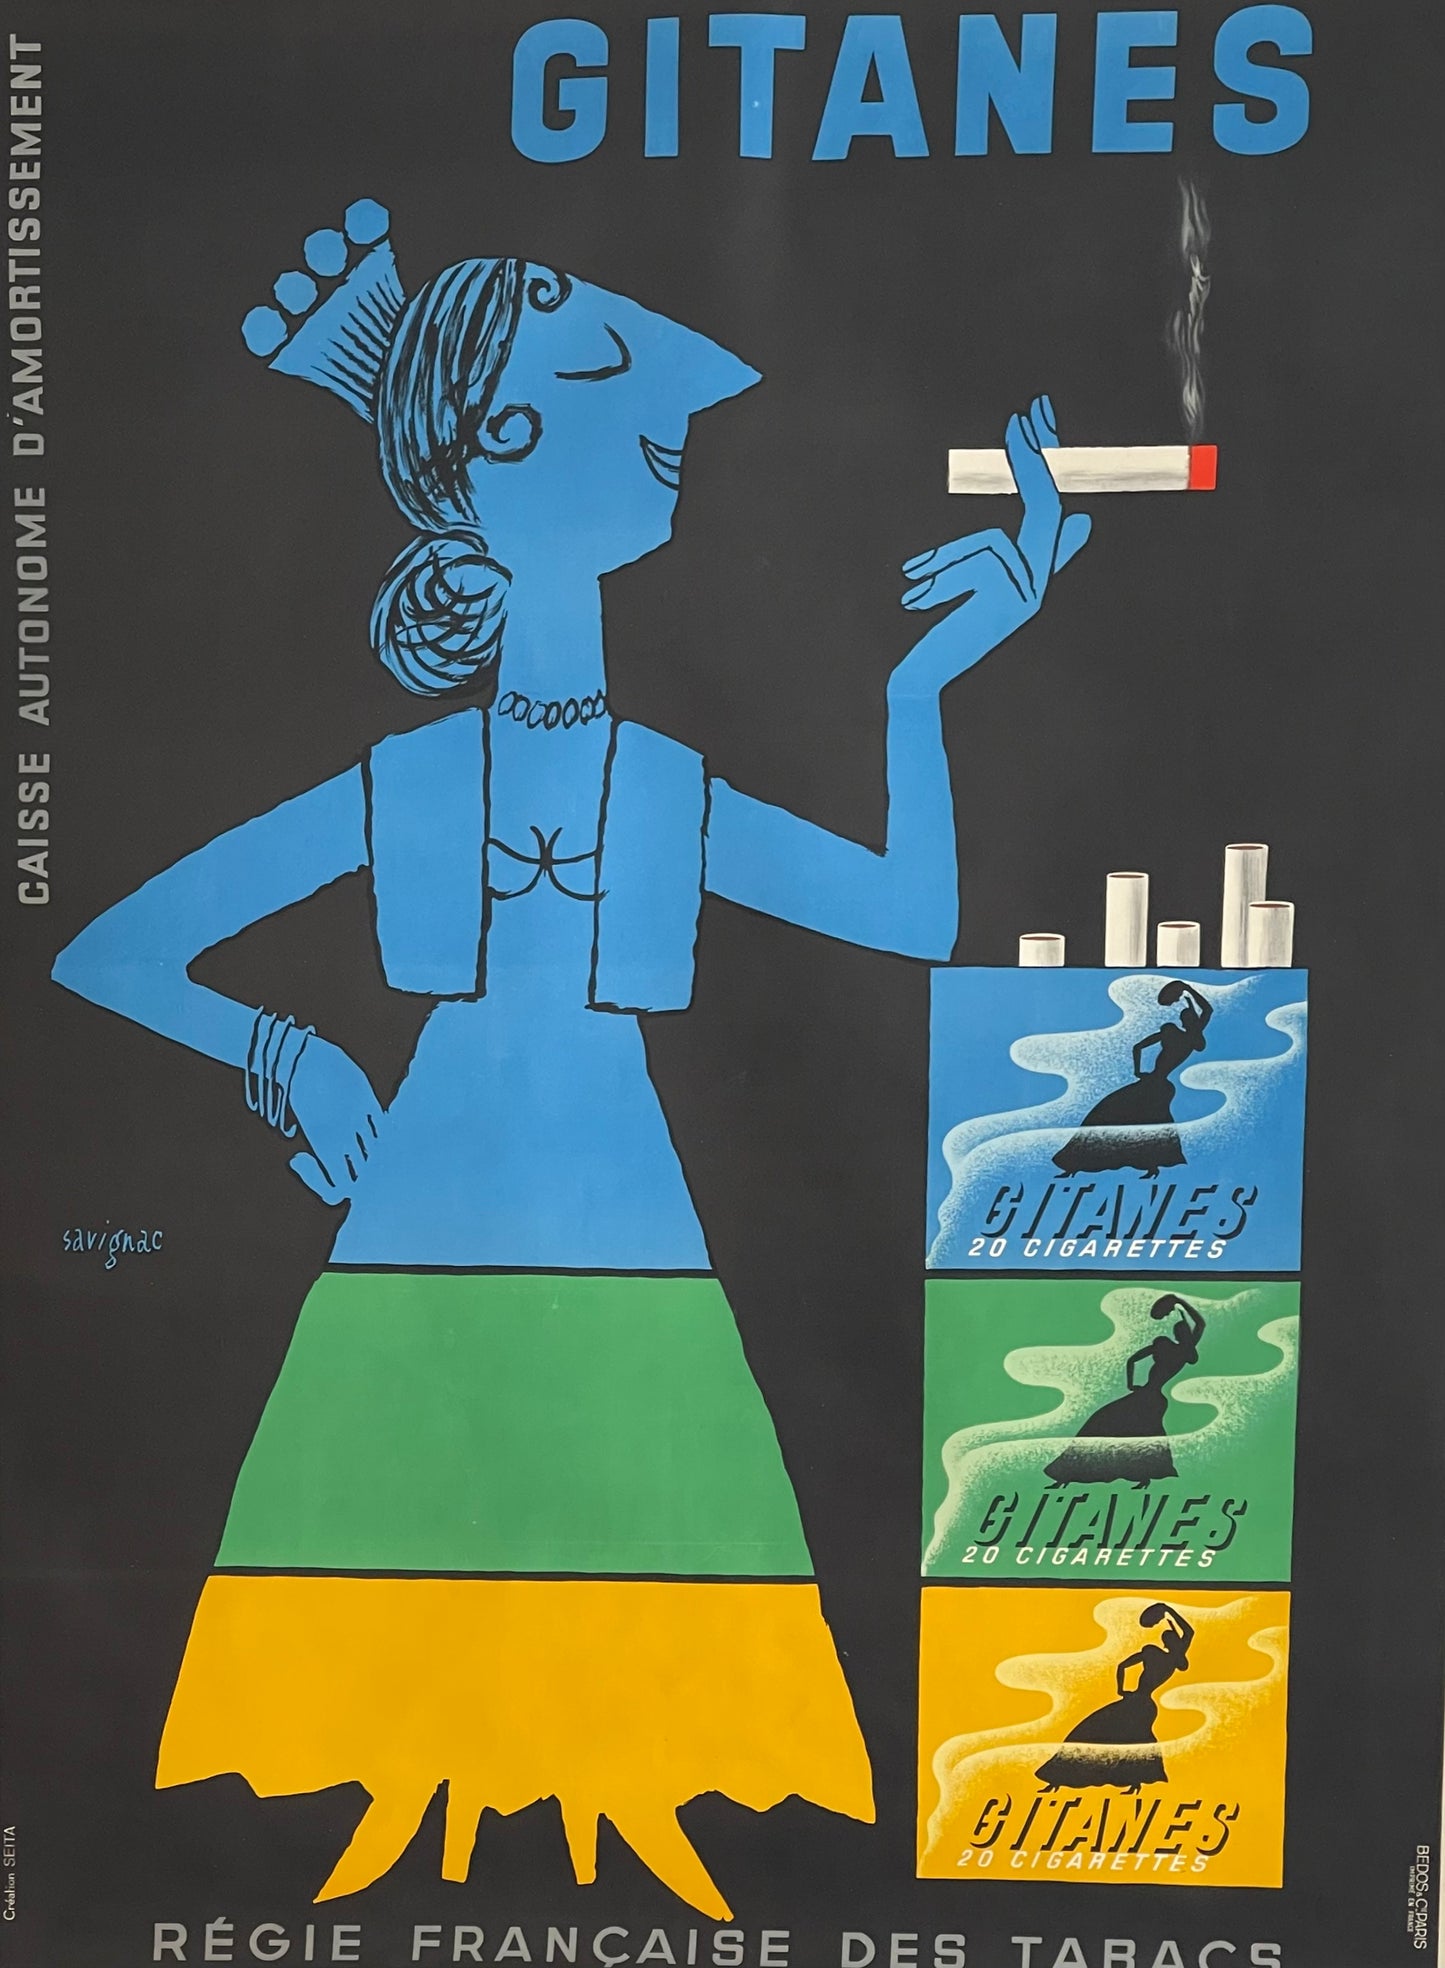 Gitanes Cigarette Advertisement by Savignac